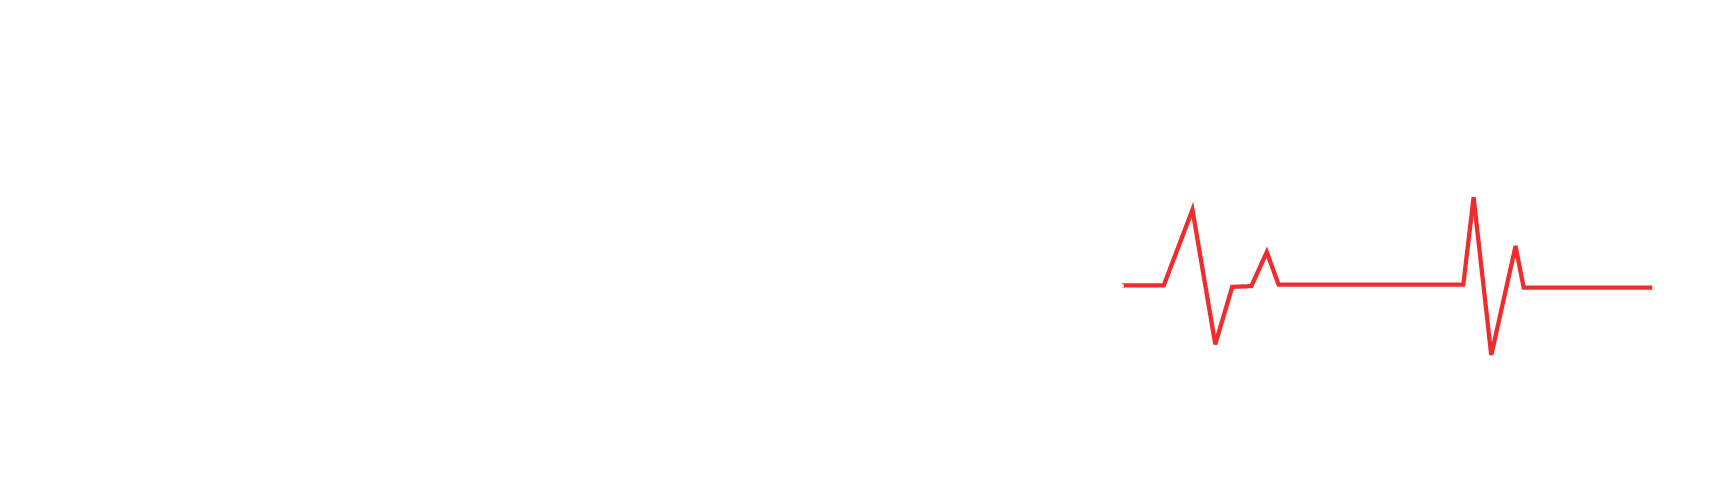 Tobacco and Health